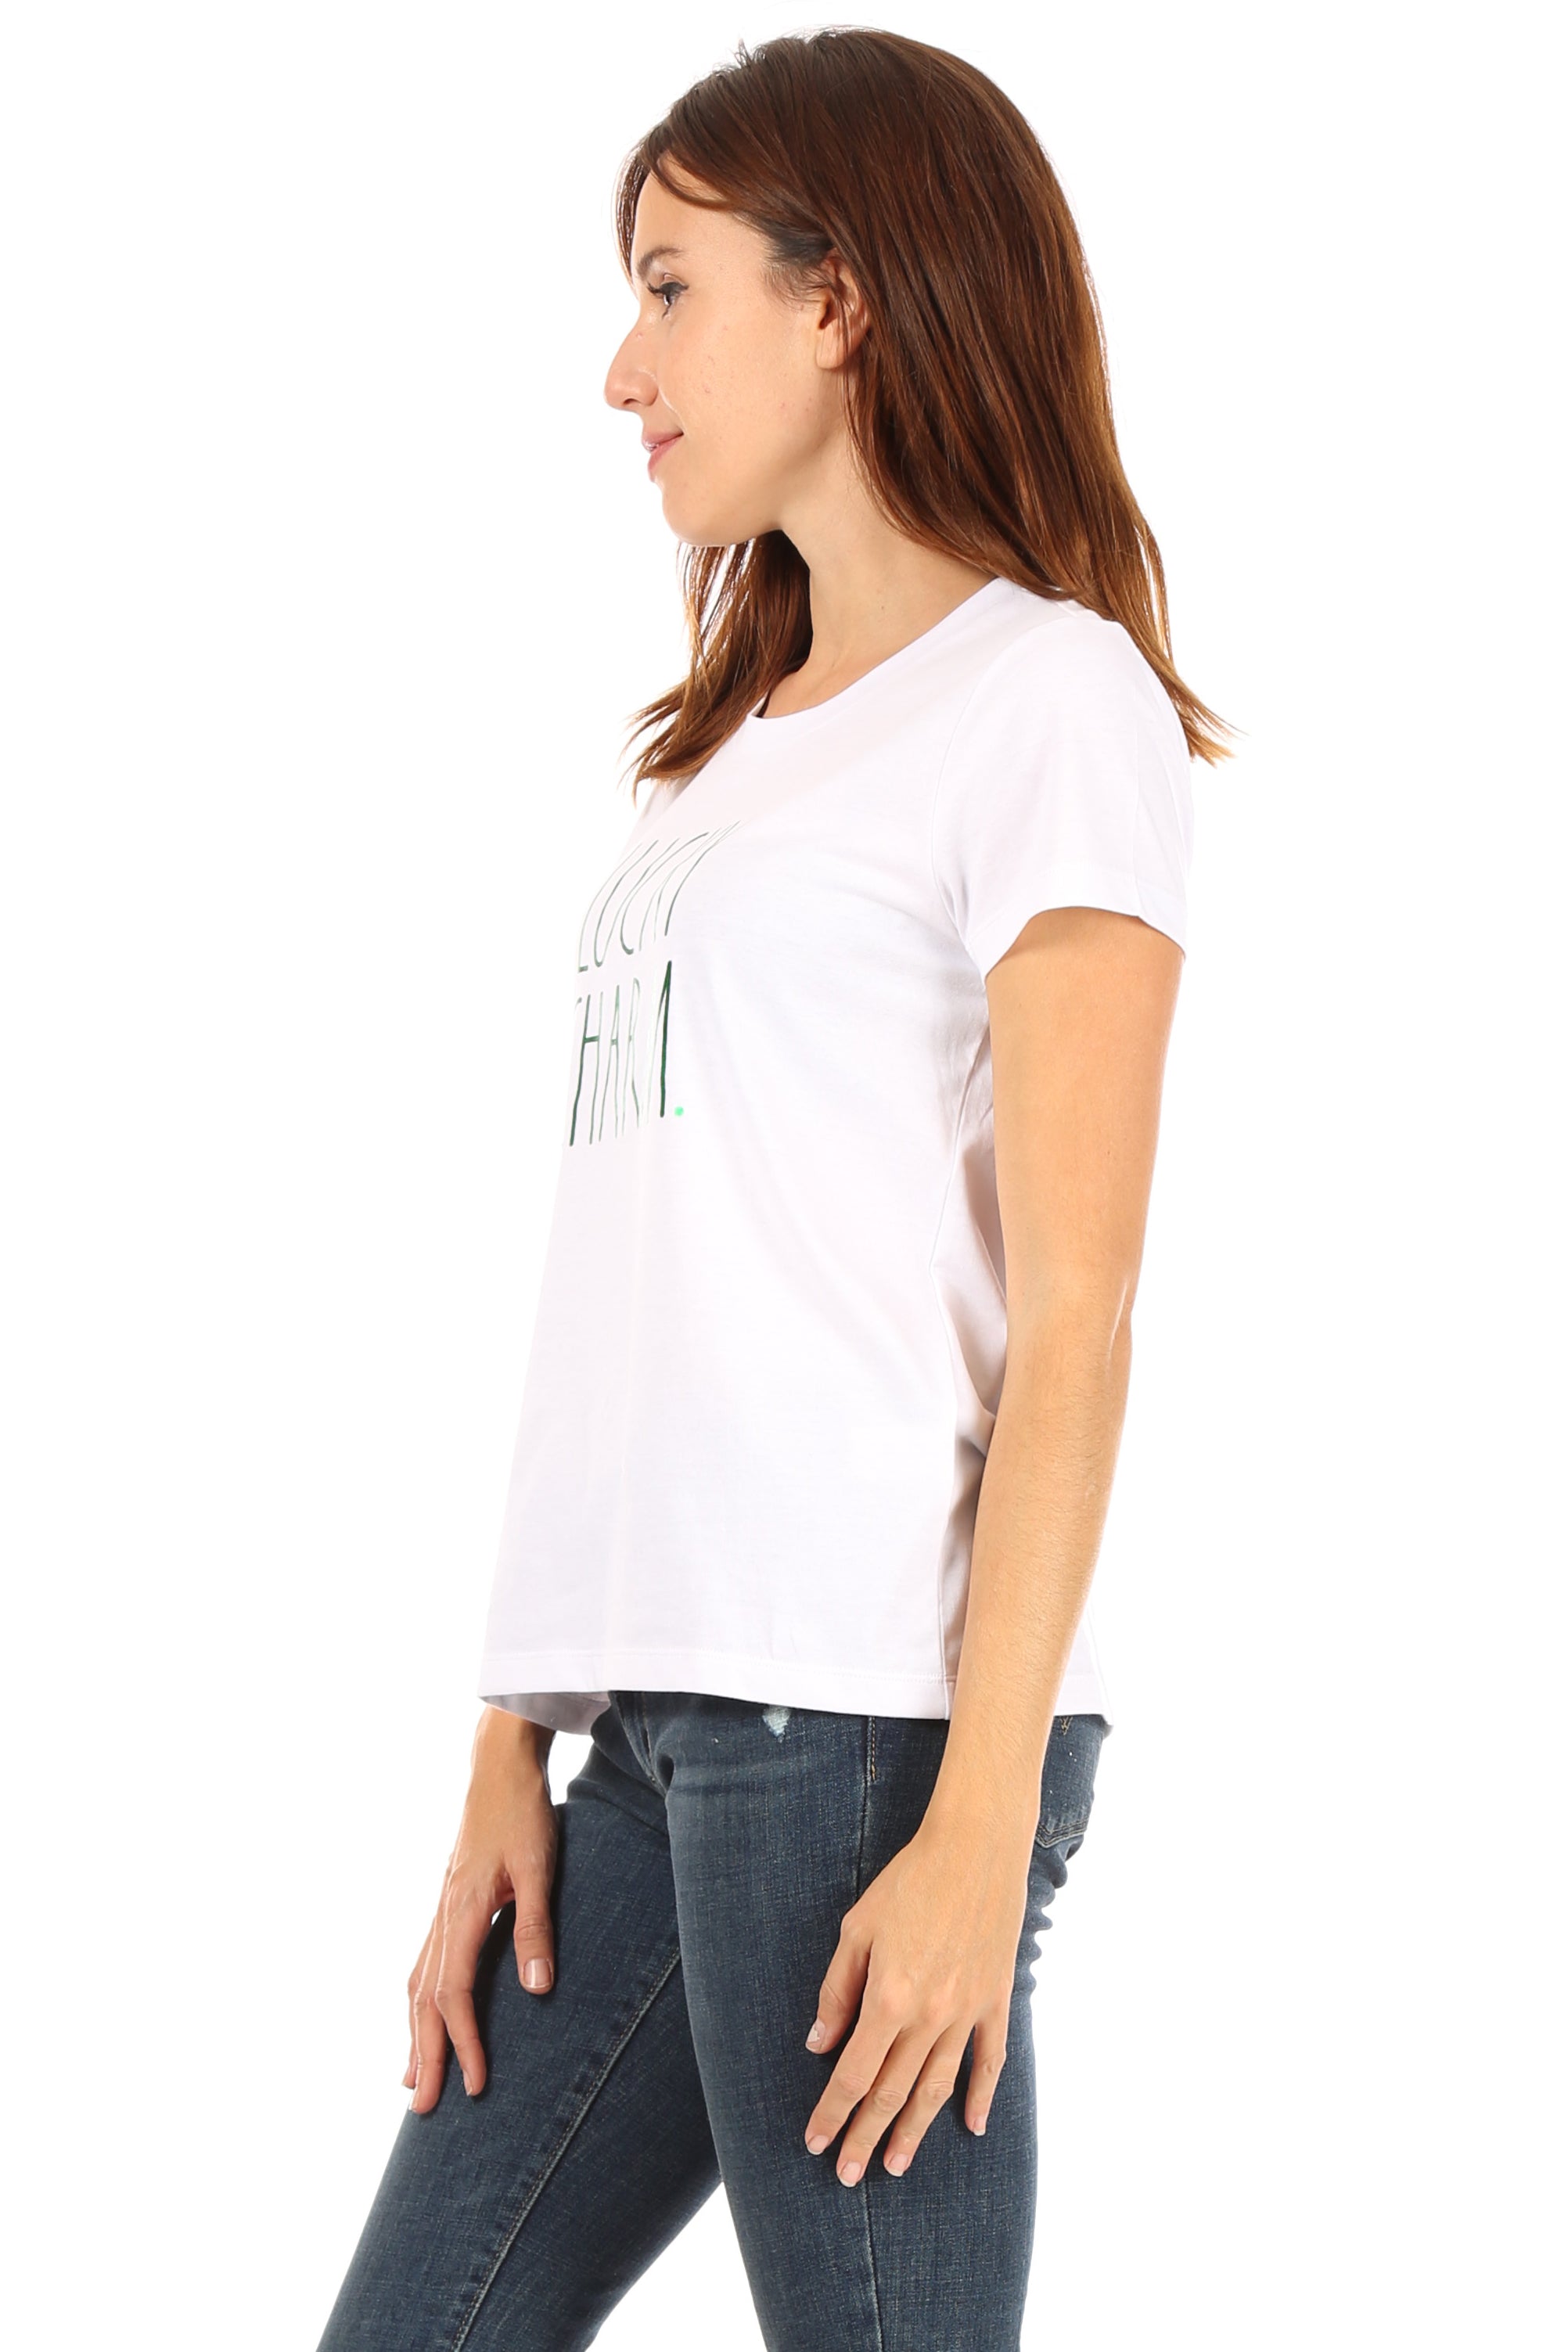 Women's "LUCKY CHARM" Short Sleeve Icon T-Shirt - Shop Rae Dunn Apparel and Sleepwear